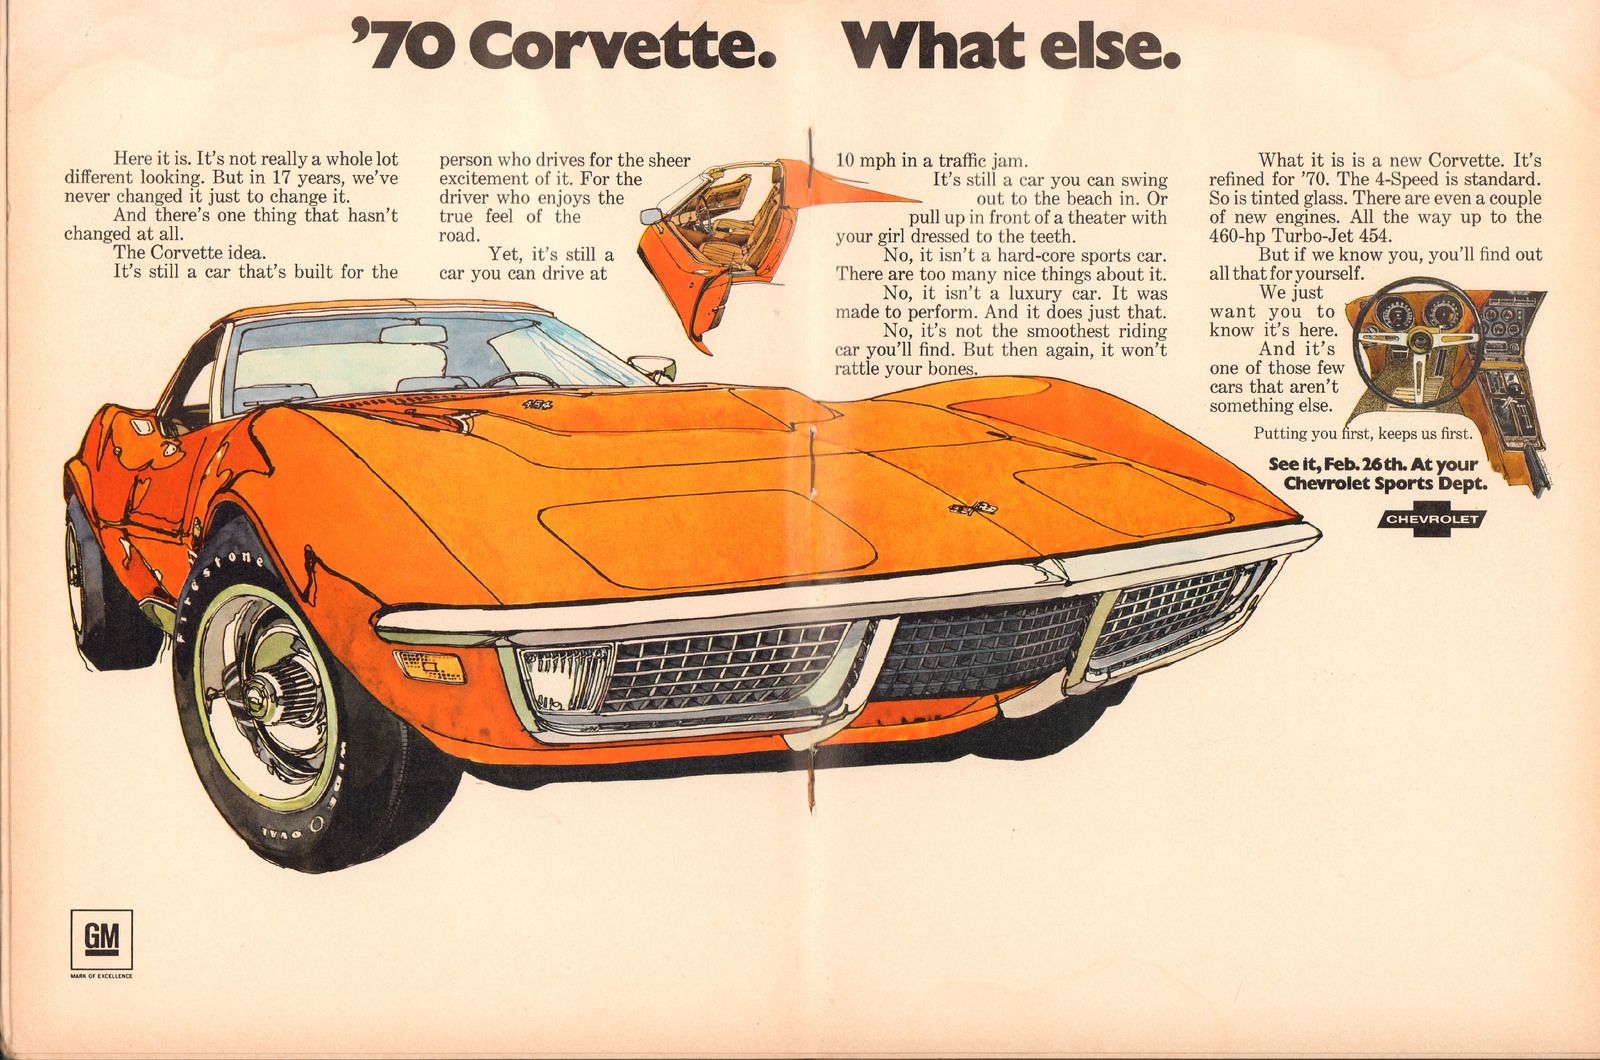 GM Advertisement for the 1970 Corvette.